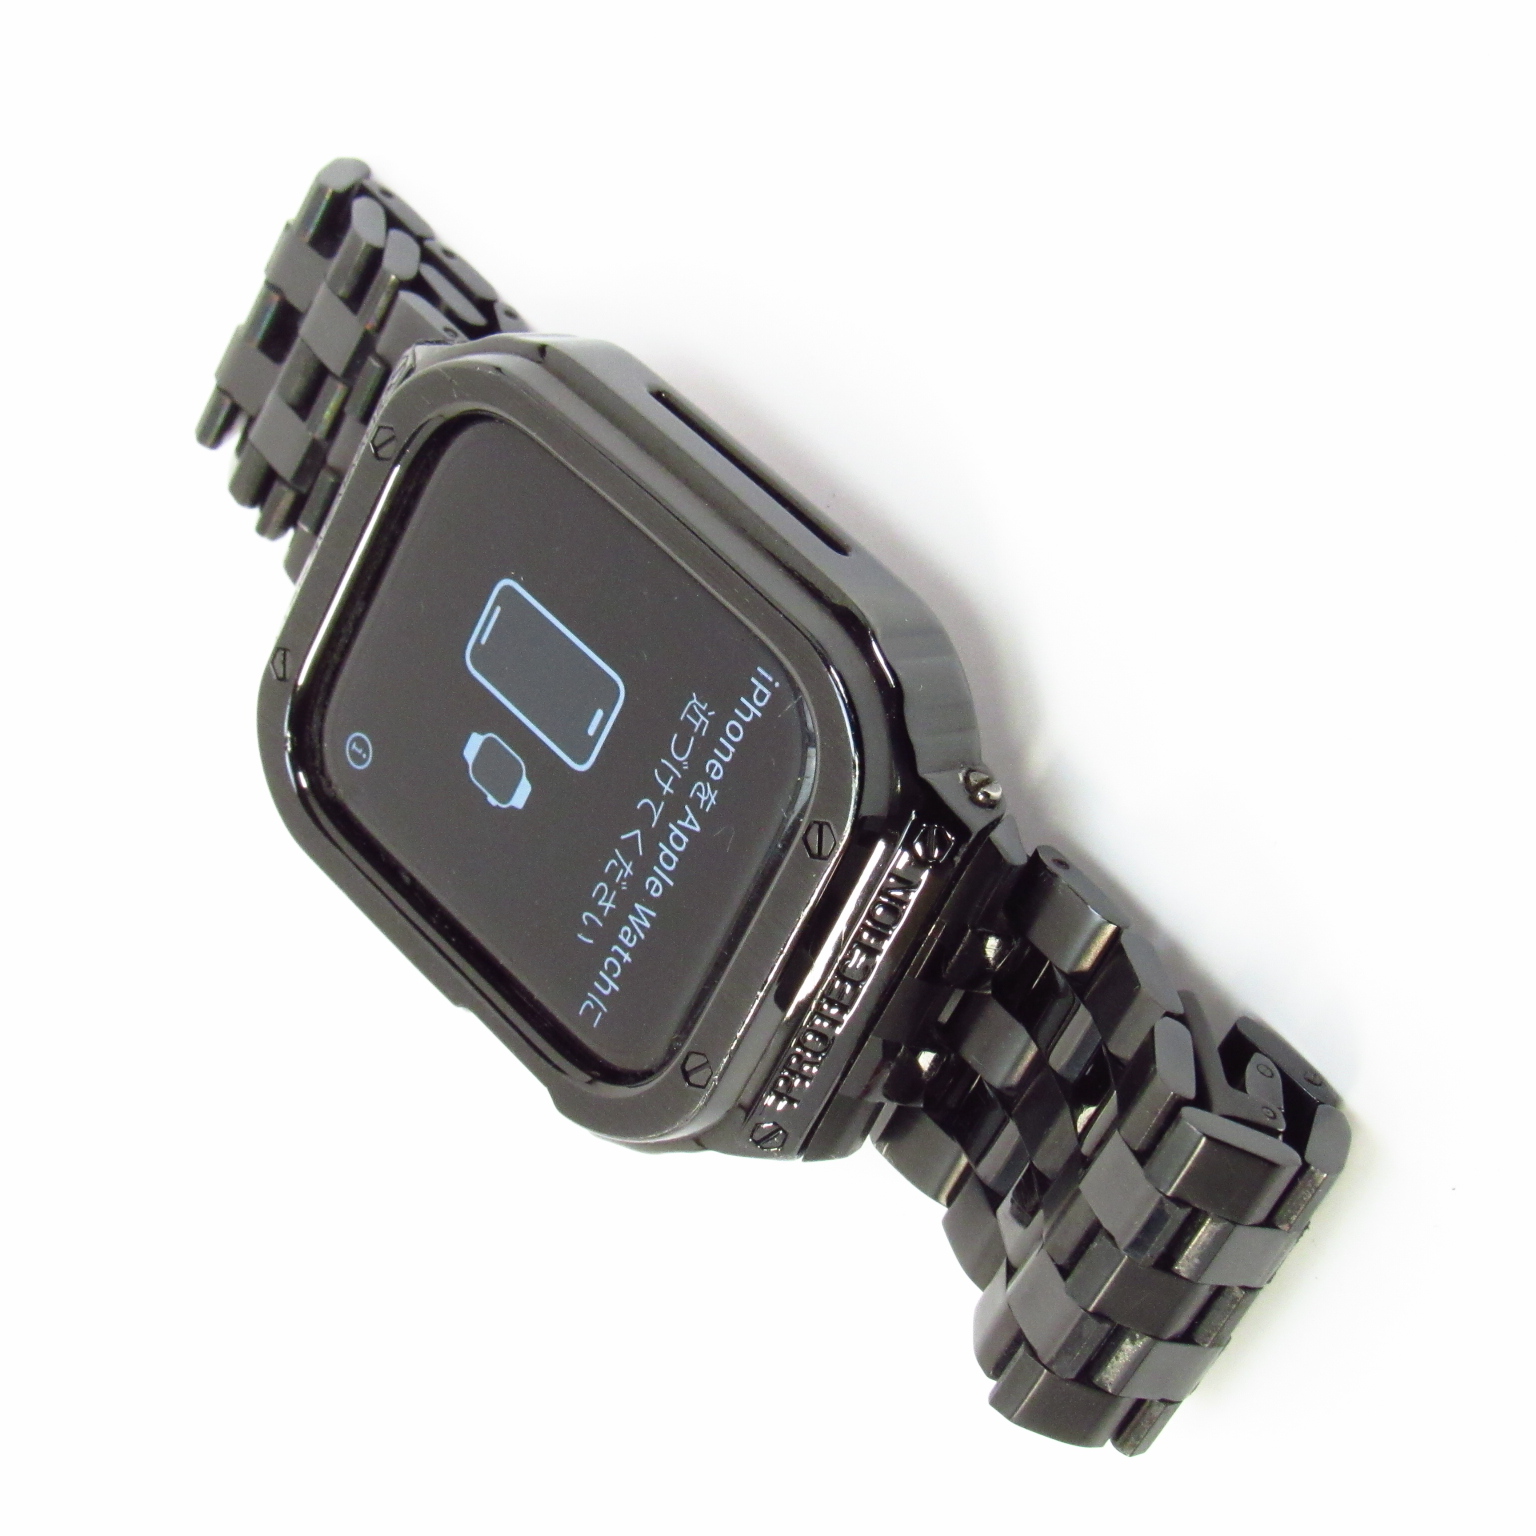 Bullstrap Metal Apple Watch Strap - Silver 44mm | 42mm